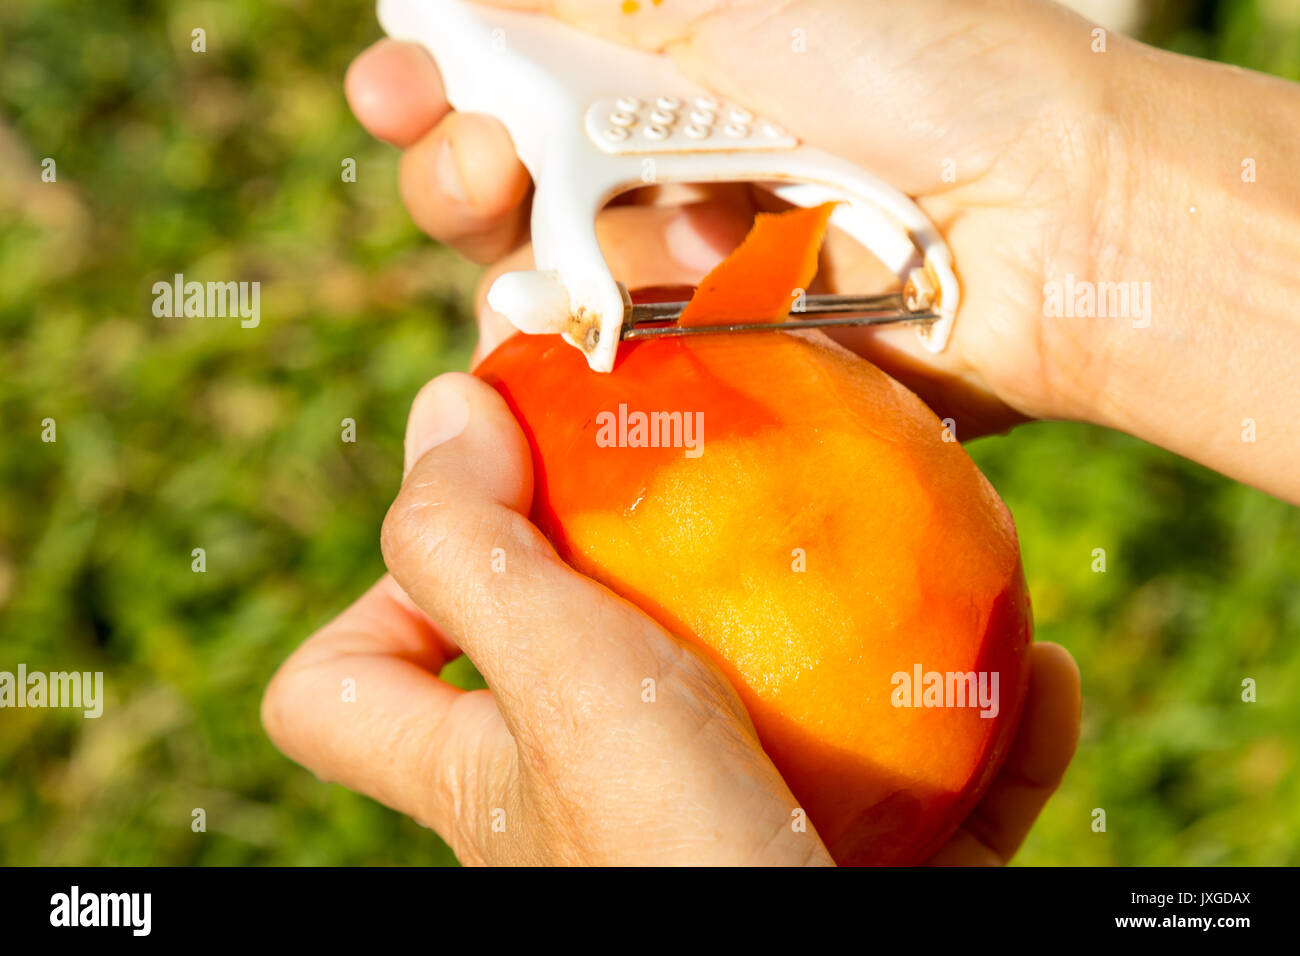 Hand holding and peeling kaki (Fuyu persimmon) fruit Stock Photo